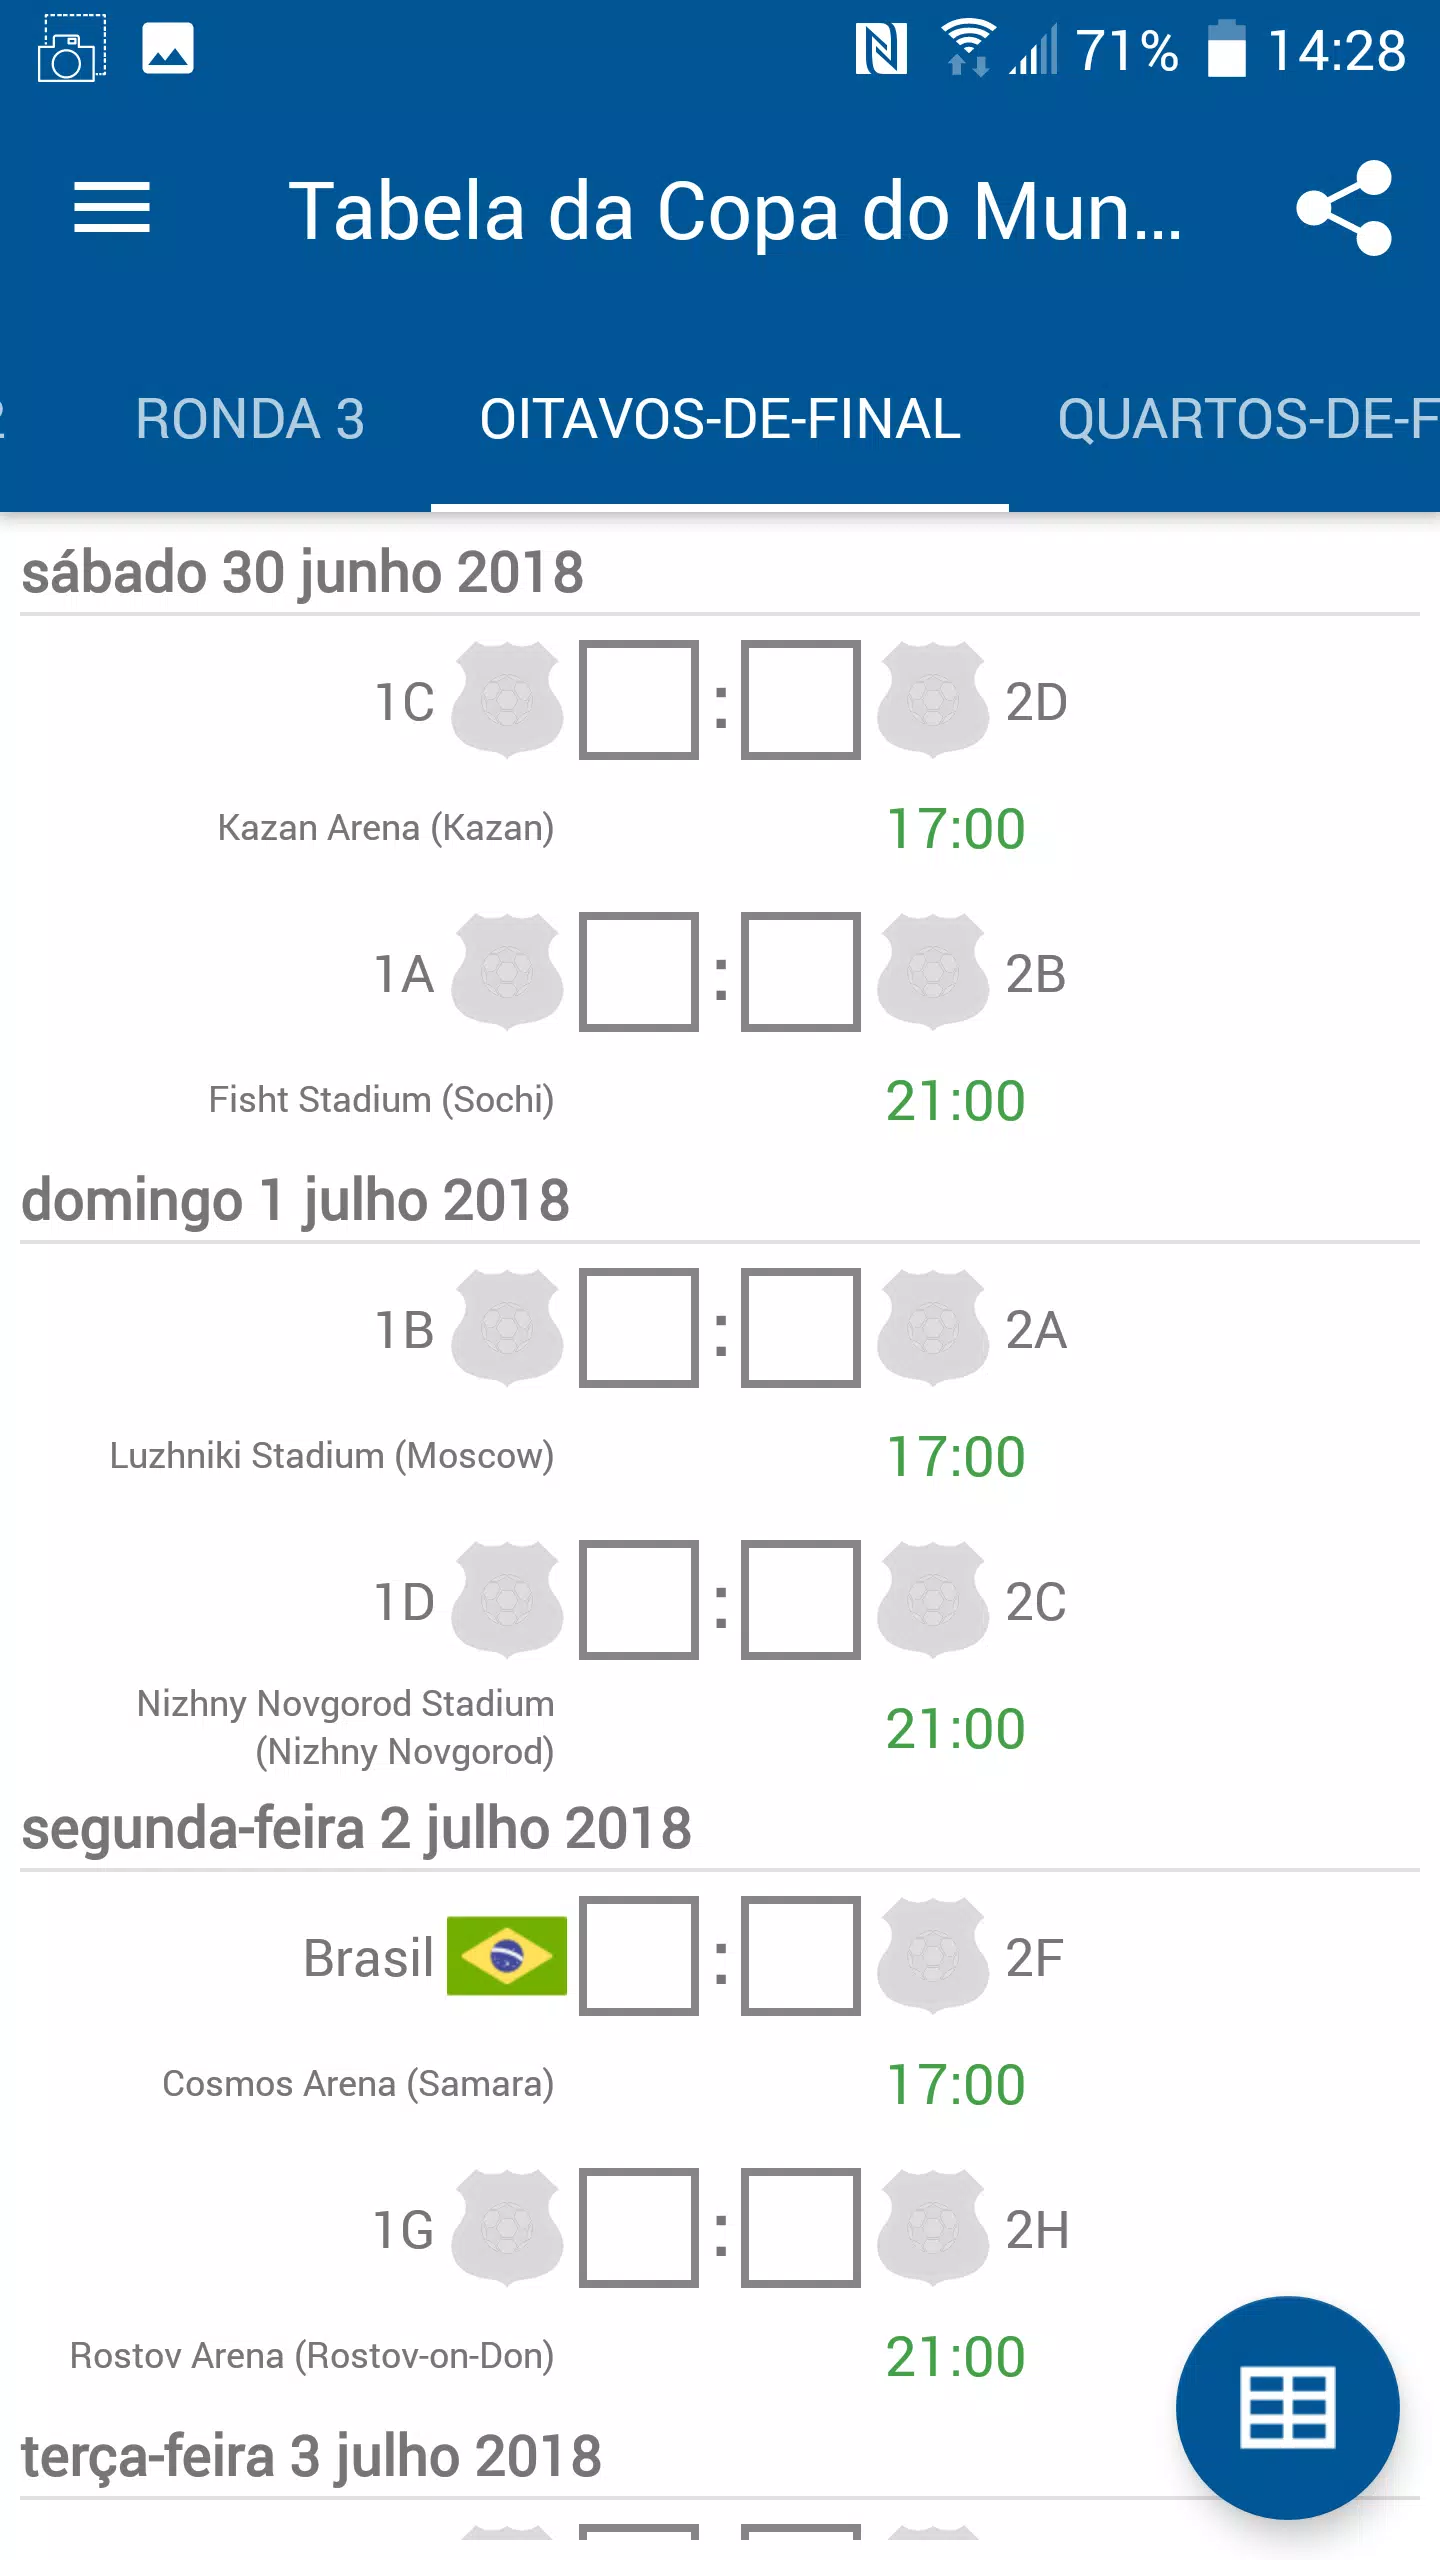 Pull requests · AlexandreAkao/Tabela-Copa-do-Mundo-2018 · GitHub